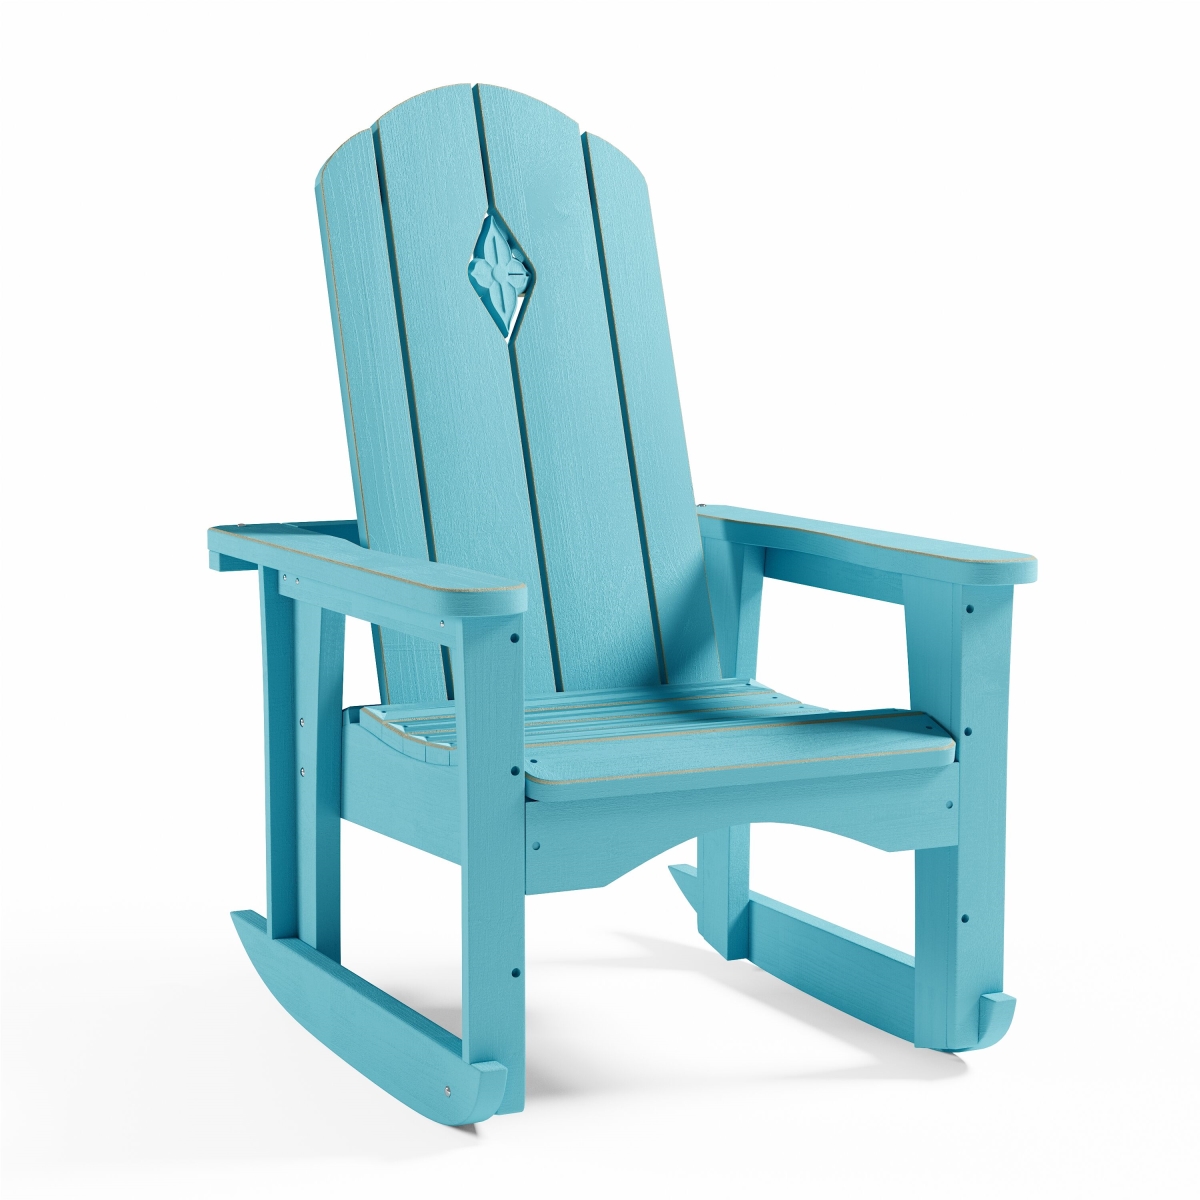 Hogan Supplies Cali Wood Rocker Lounge Chair, Lime Polymer - 30 x 33.5 x 42 in.